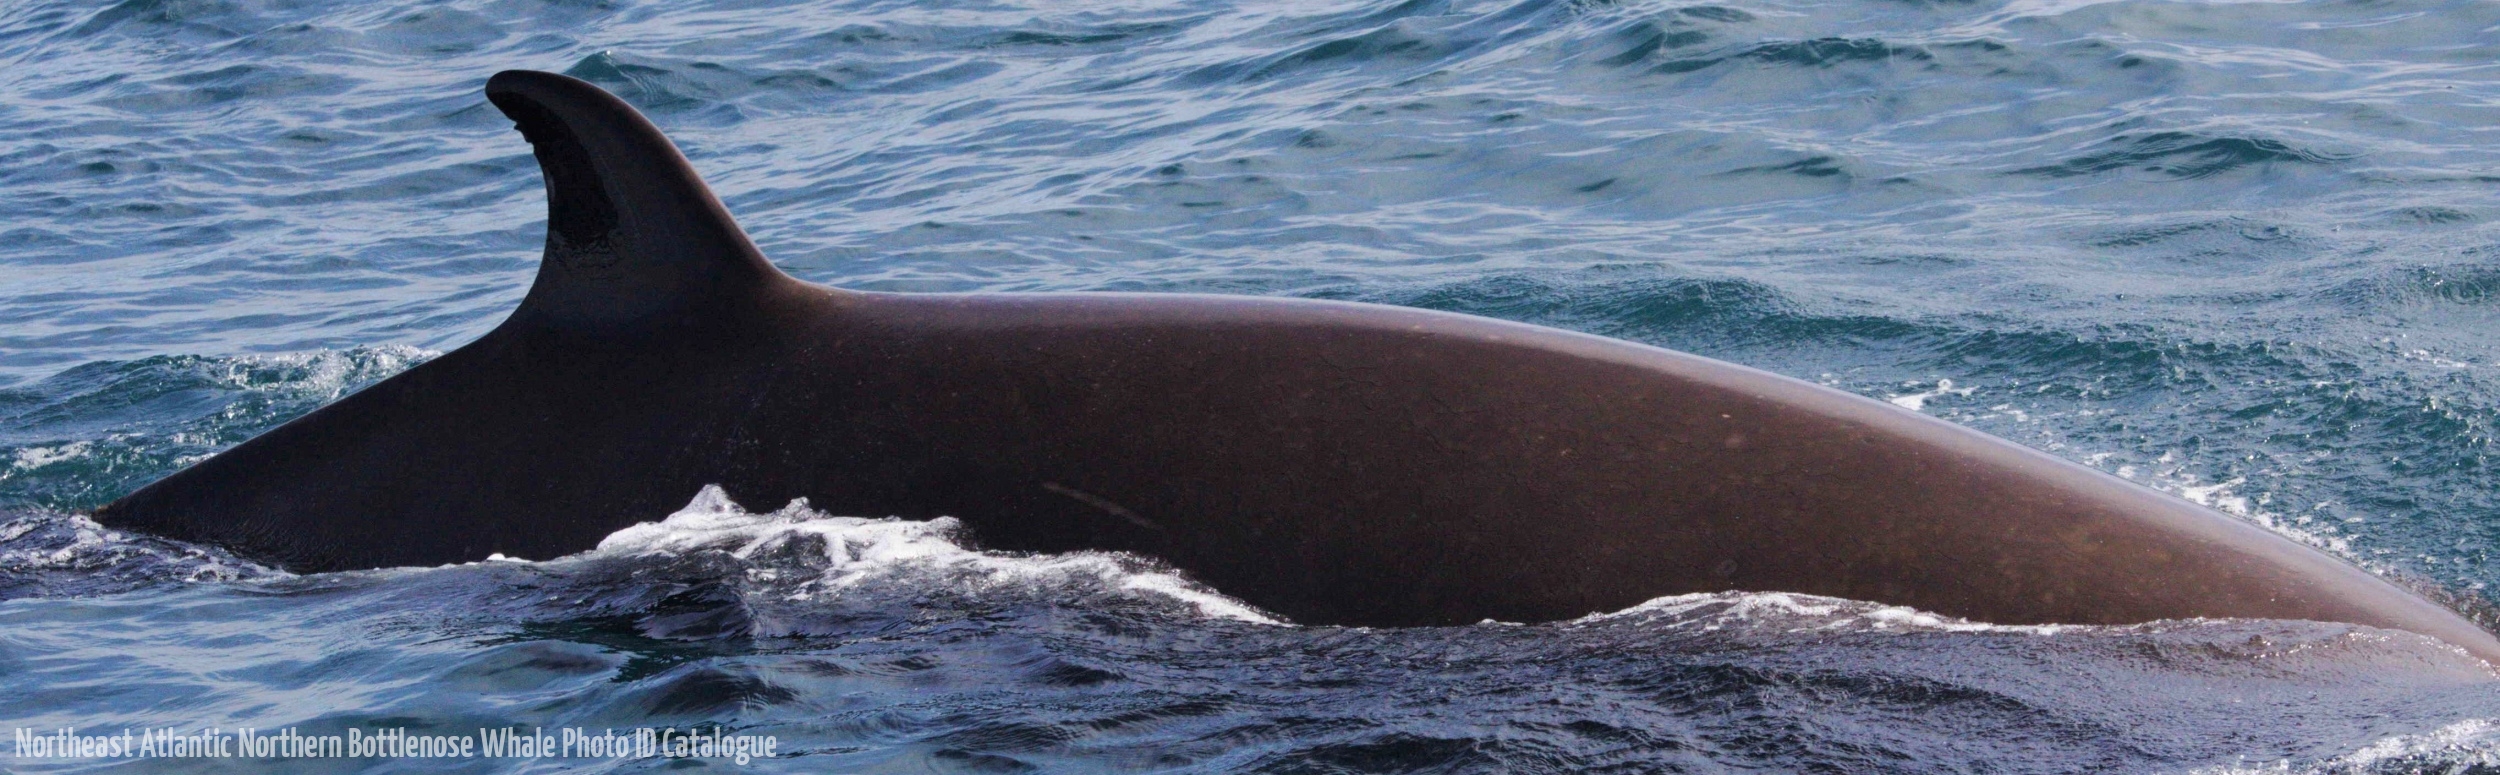 Whale ID: 0296,  Date taken: 12-06-2014,  Photographer: Lucia M. Martín López